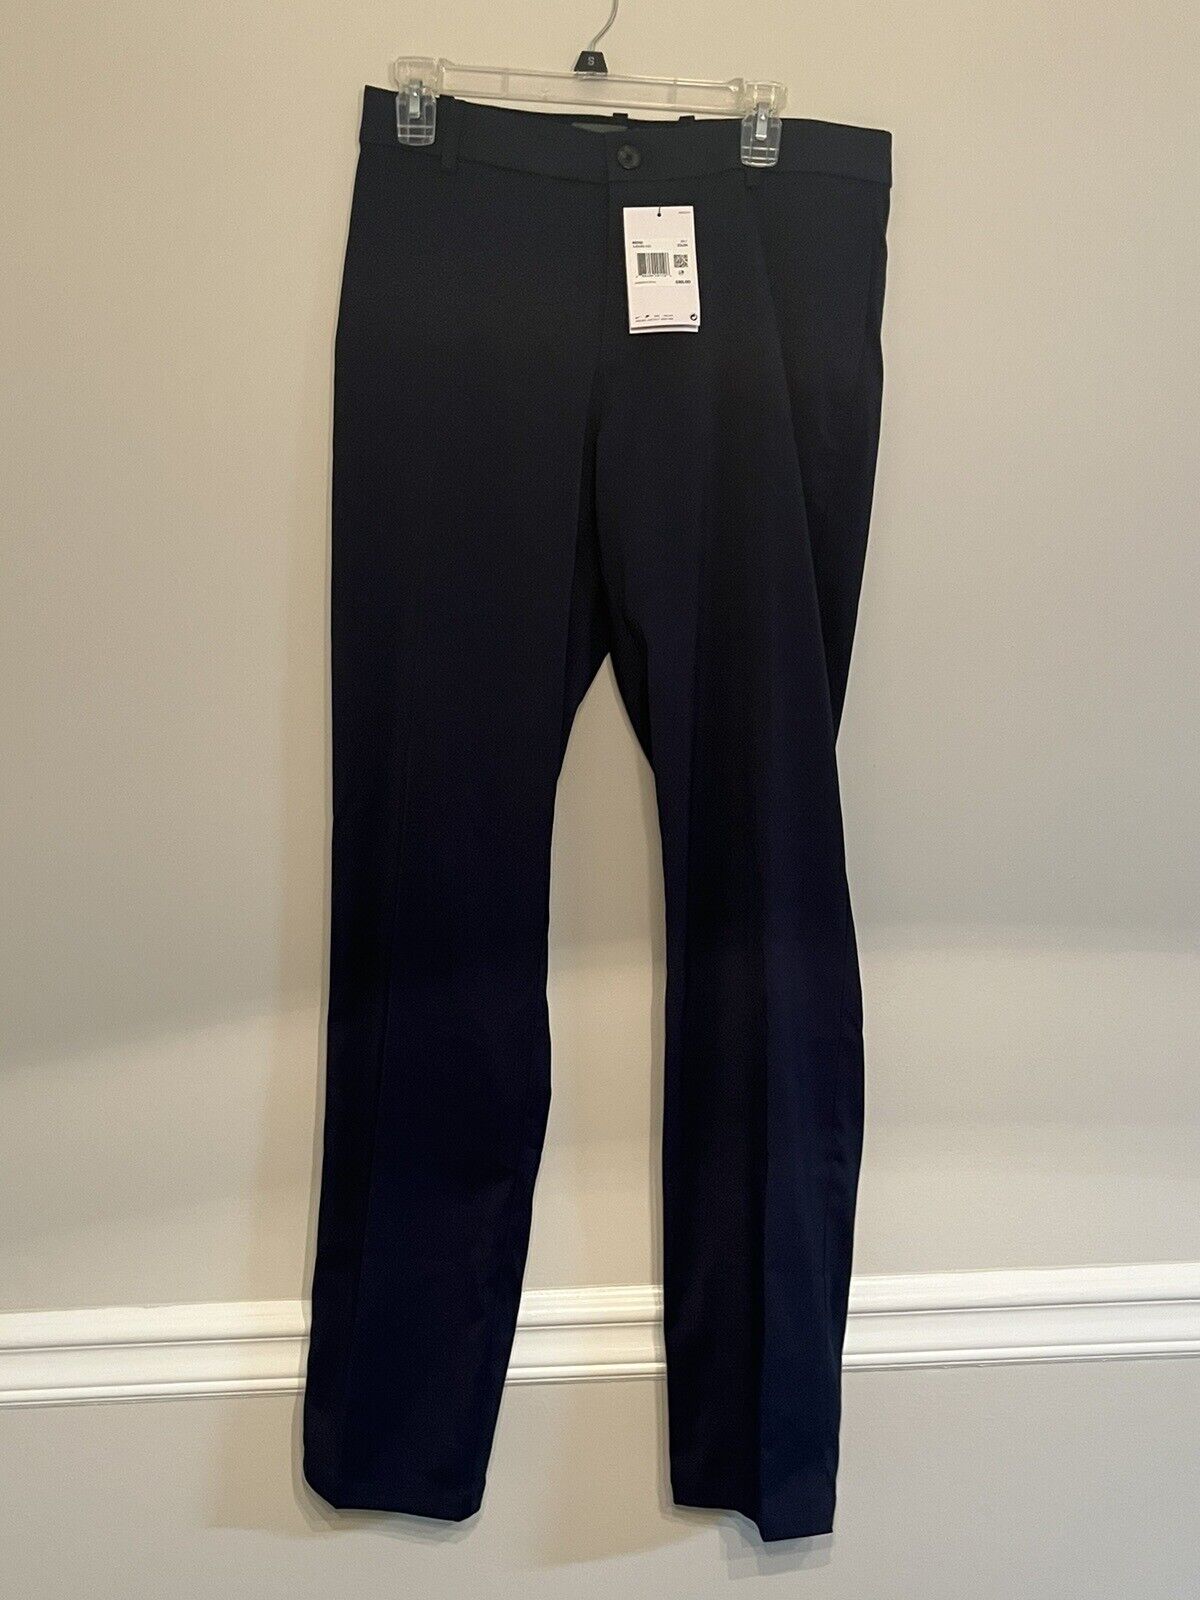 Nike Golf Pants Navy Blue - 32 x 34